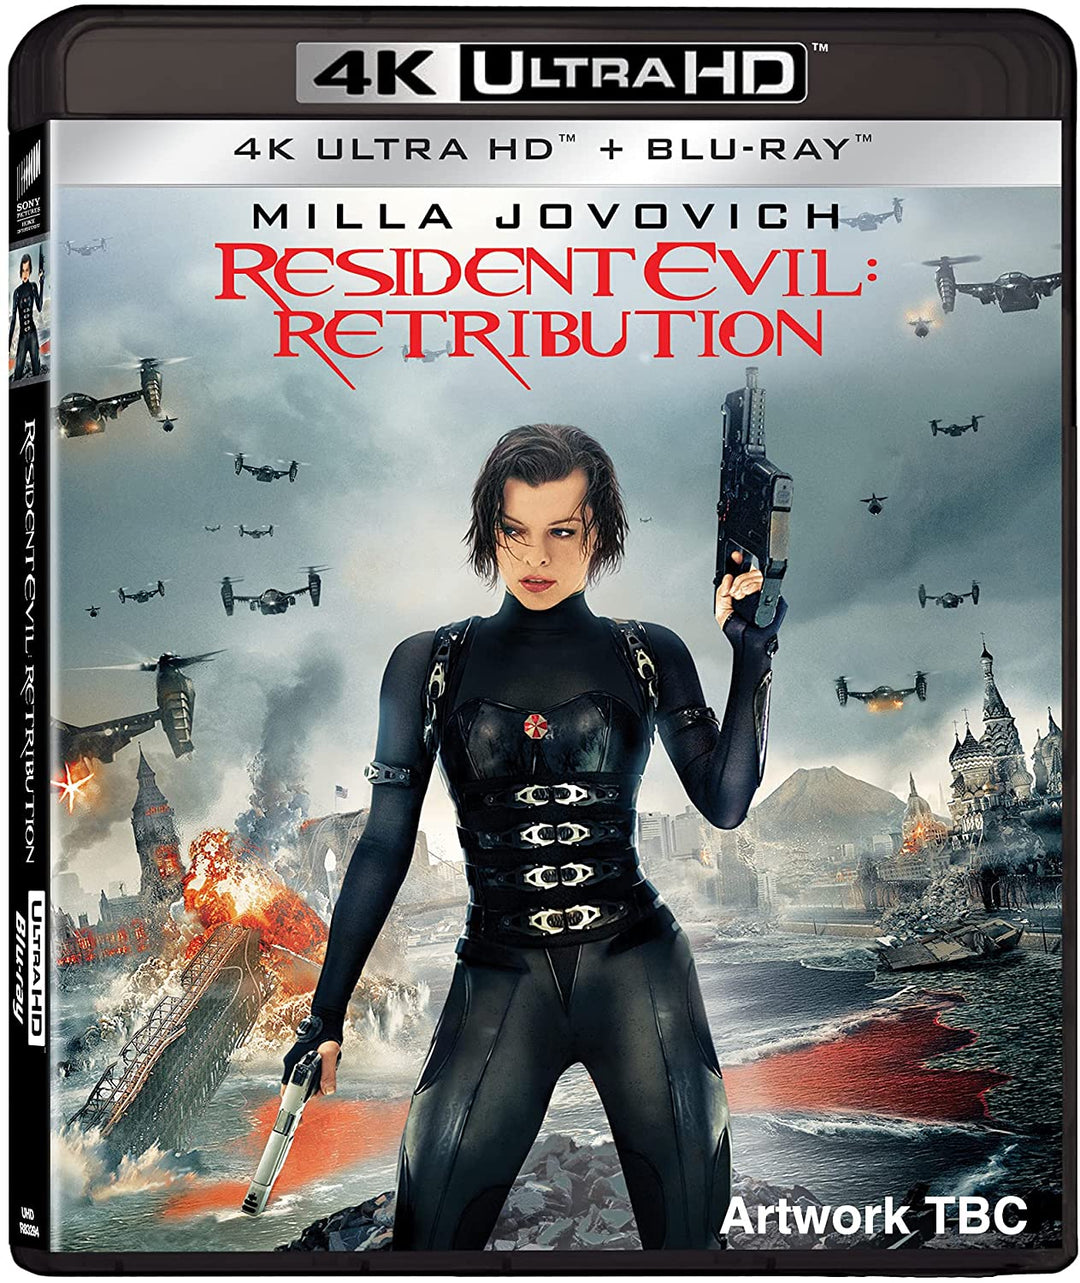 Resident Evil: Retribution (2012) (2 Discs - UHD & BD) - Action/Horror [BLu-ray]